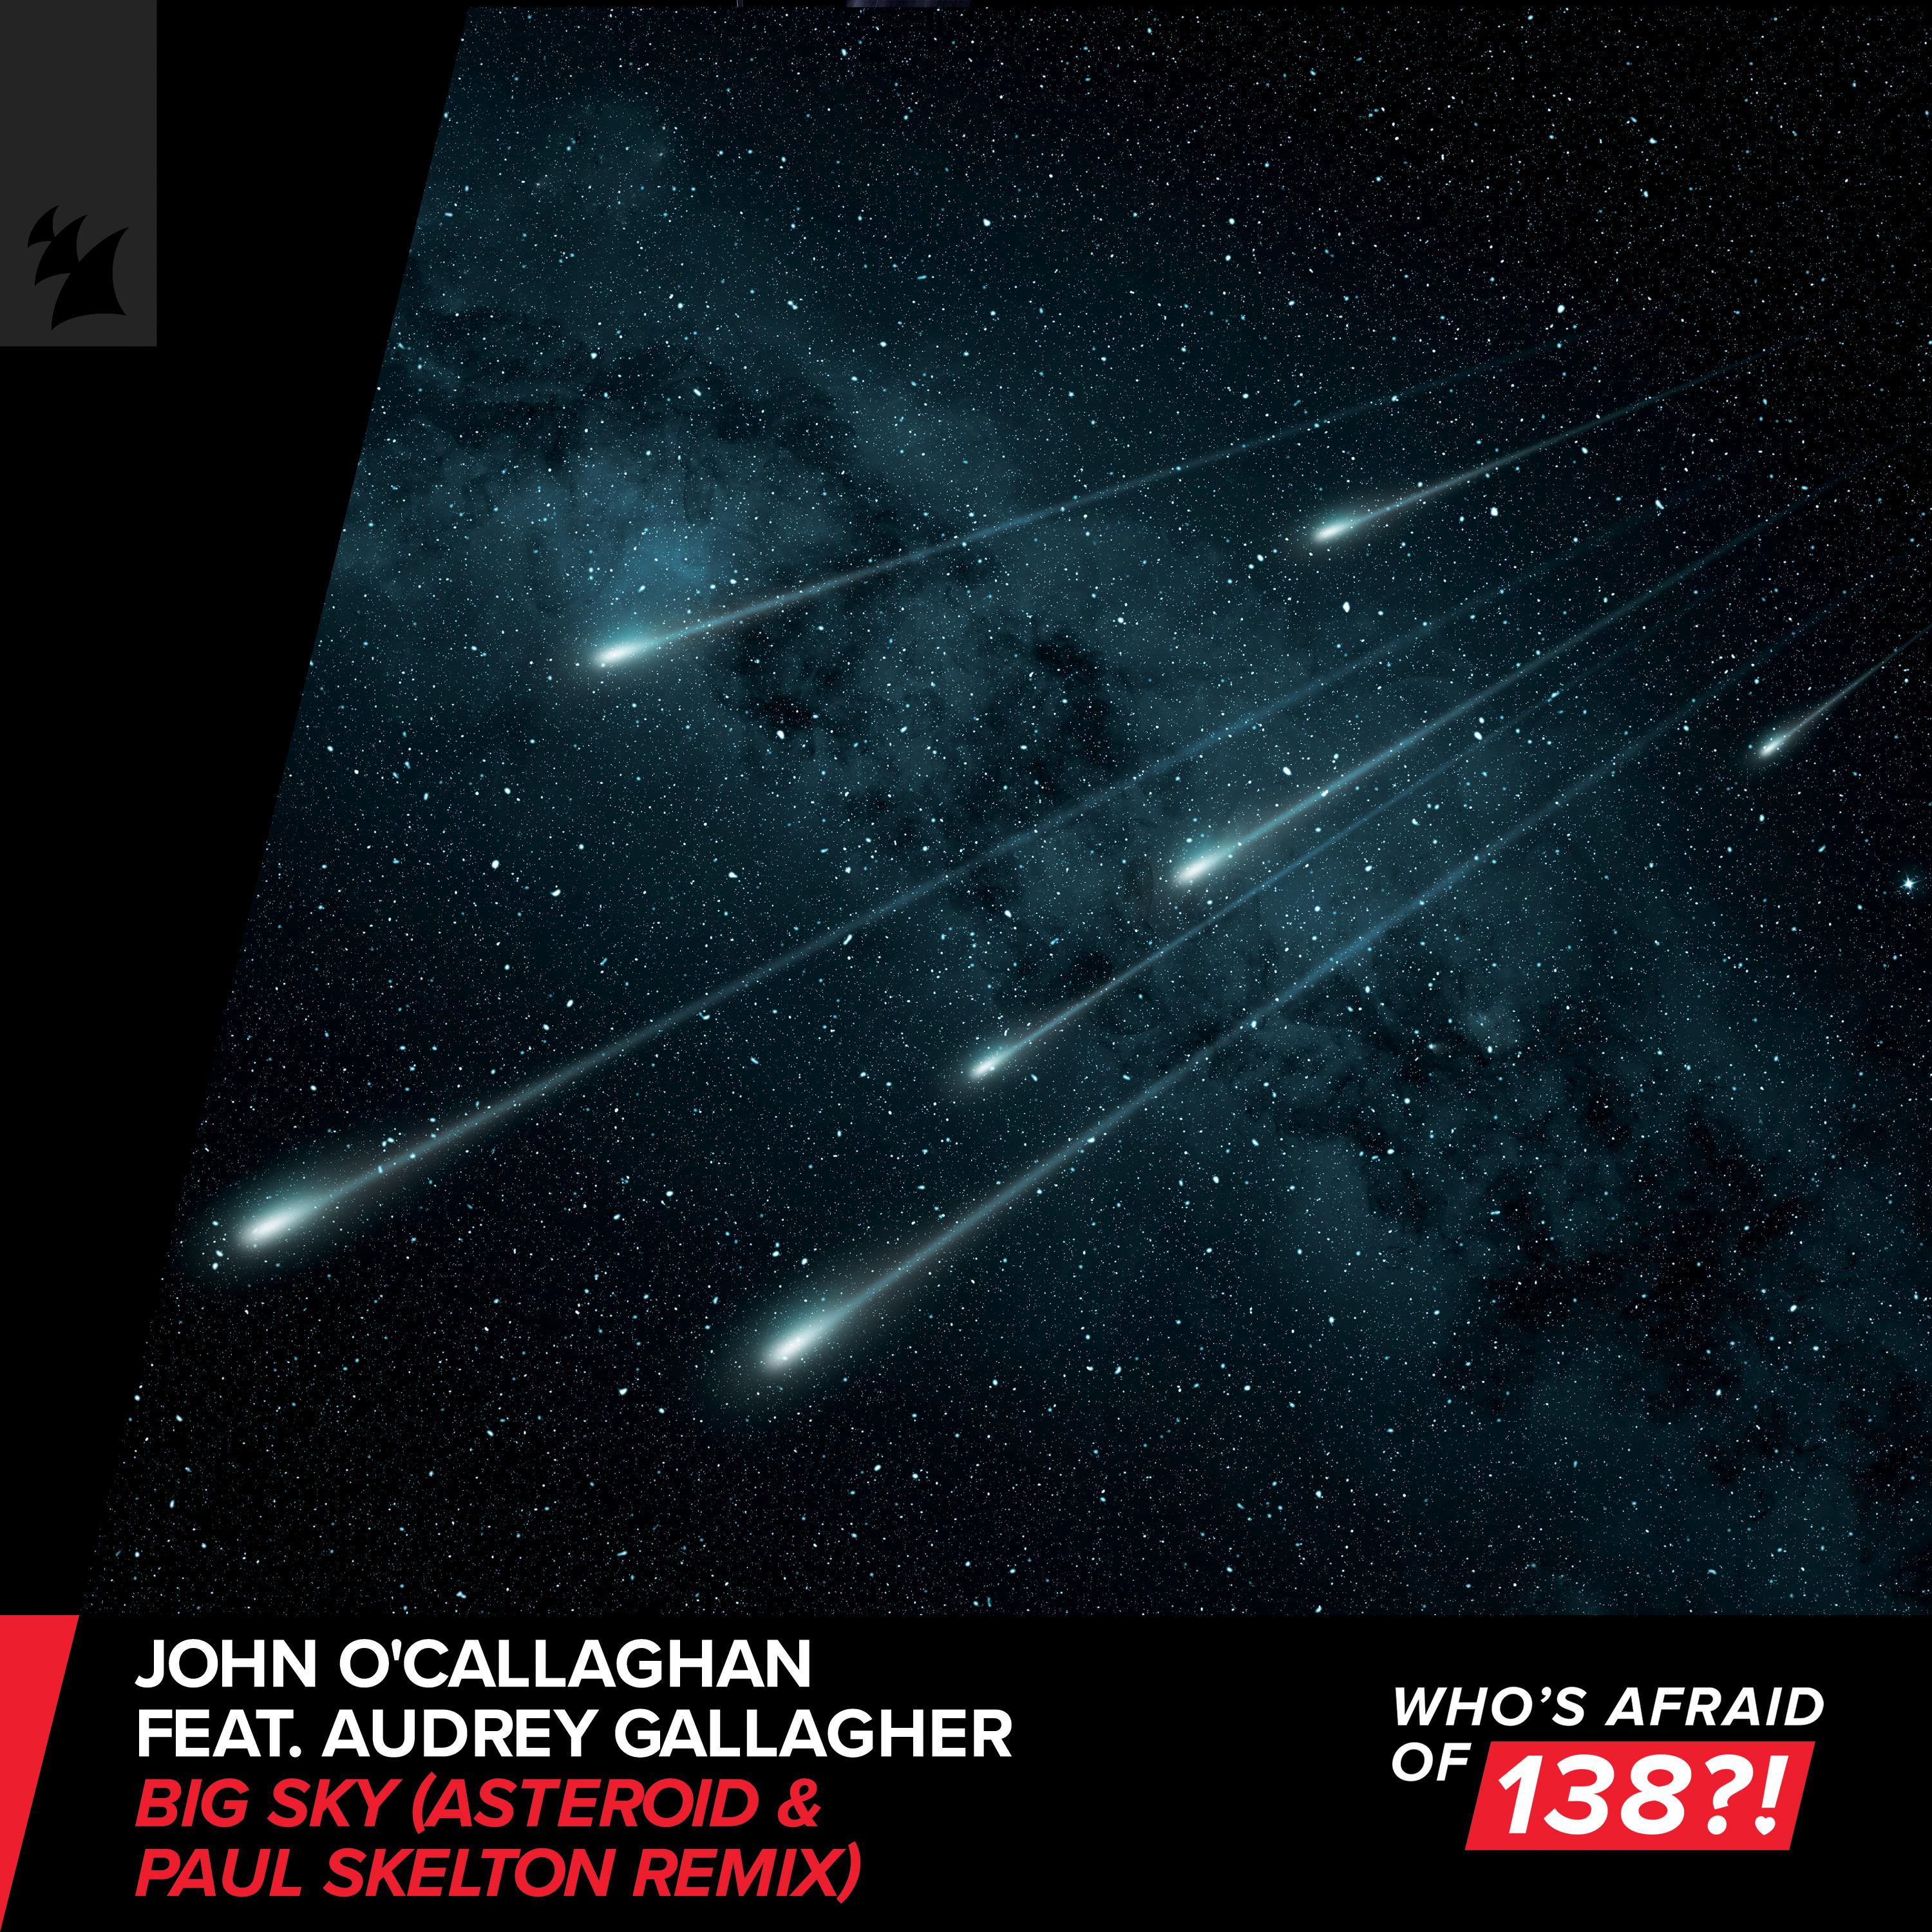 John O'Callaghan - Big Sky